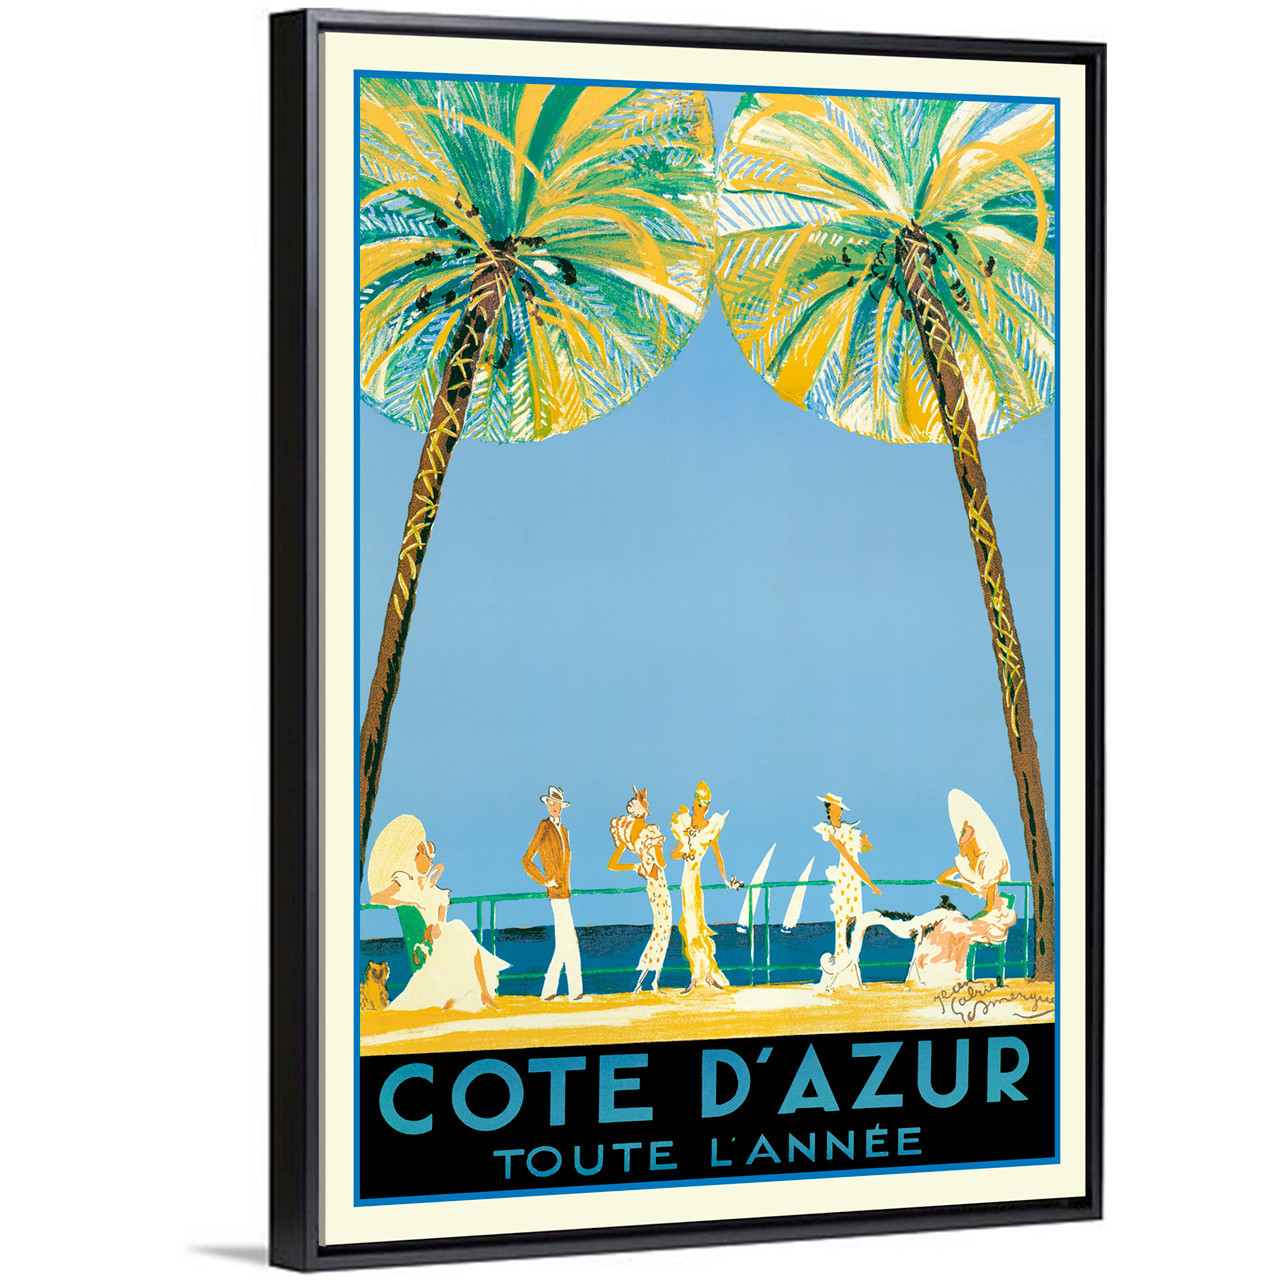 Cote dAzur toute lannee French vintage poster